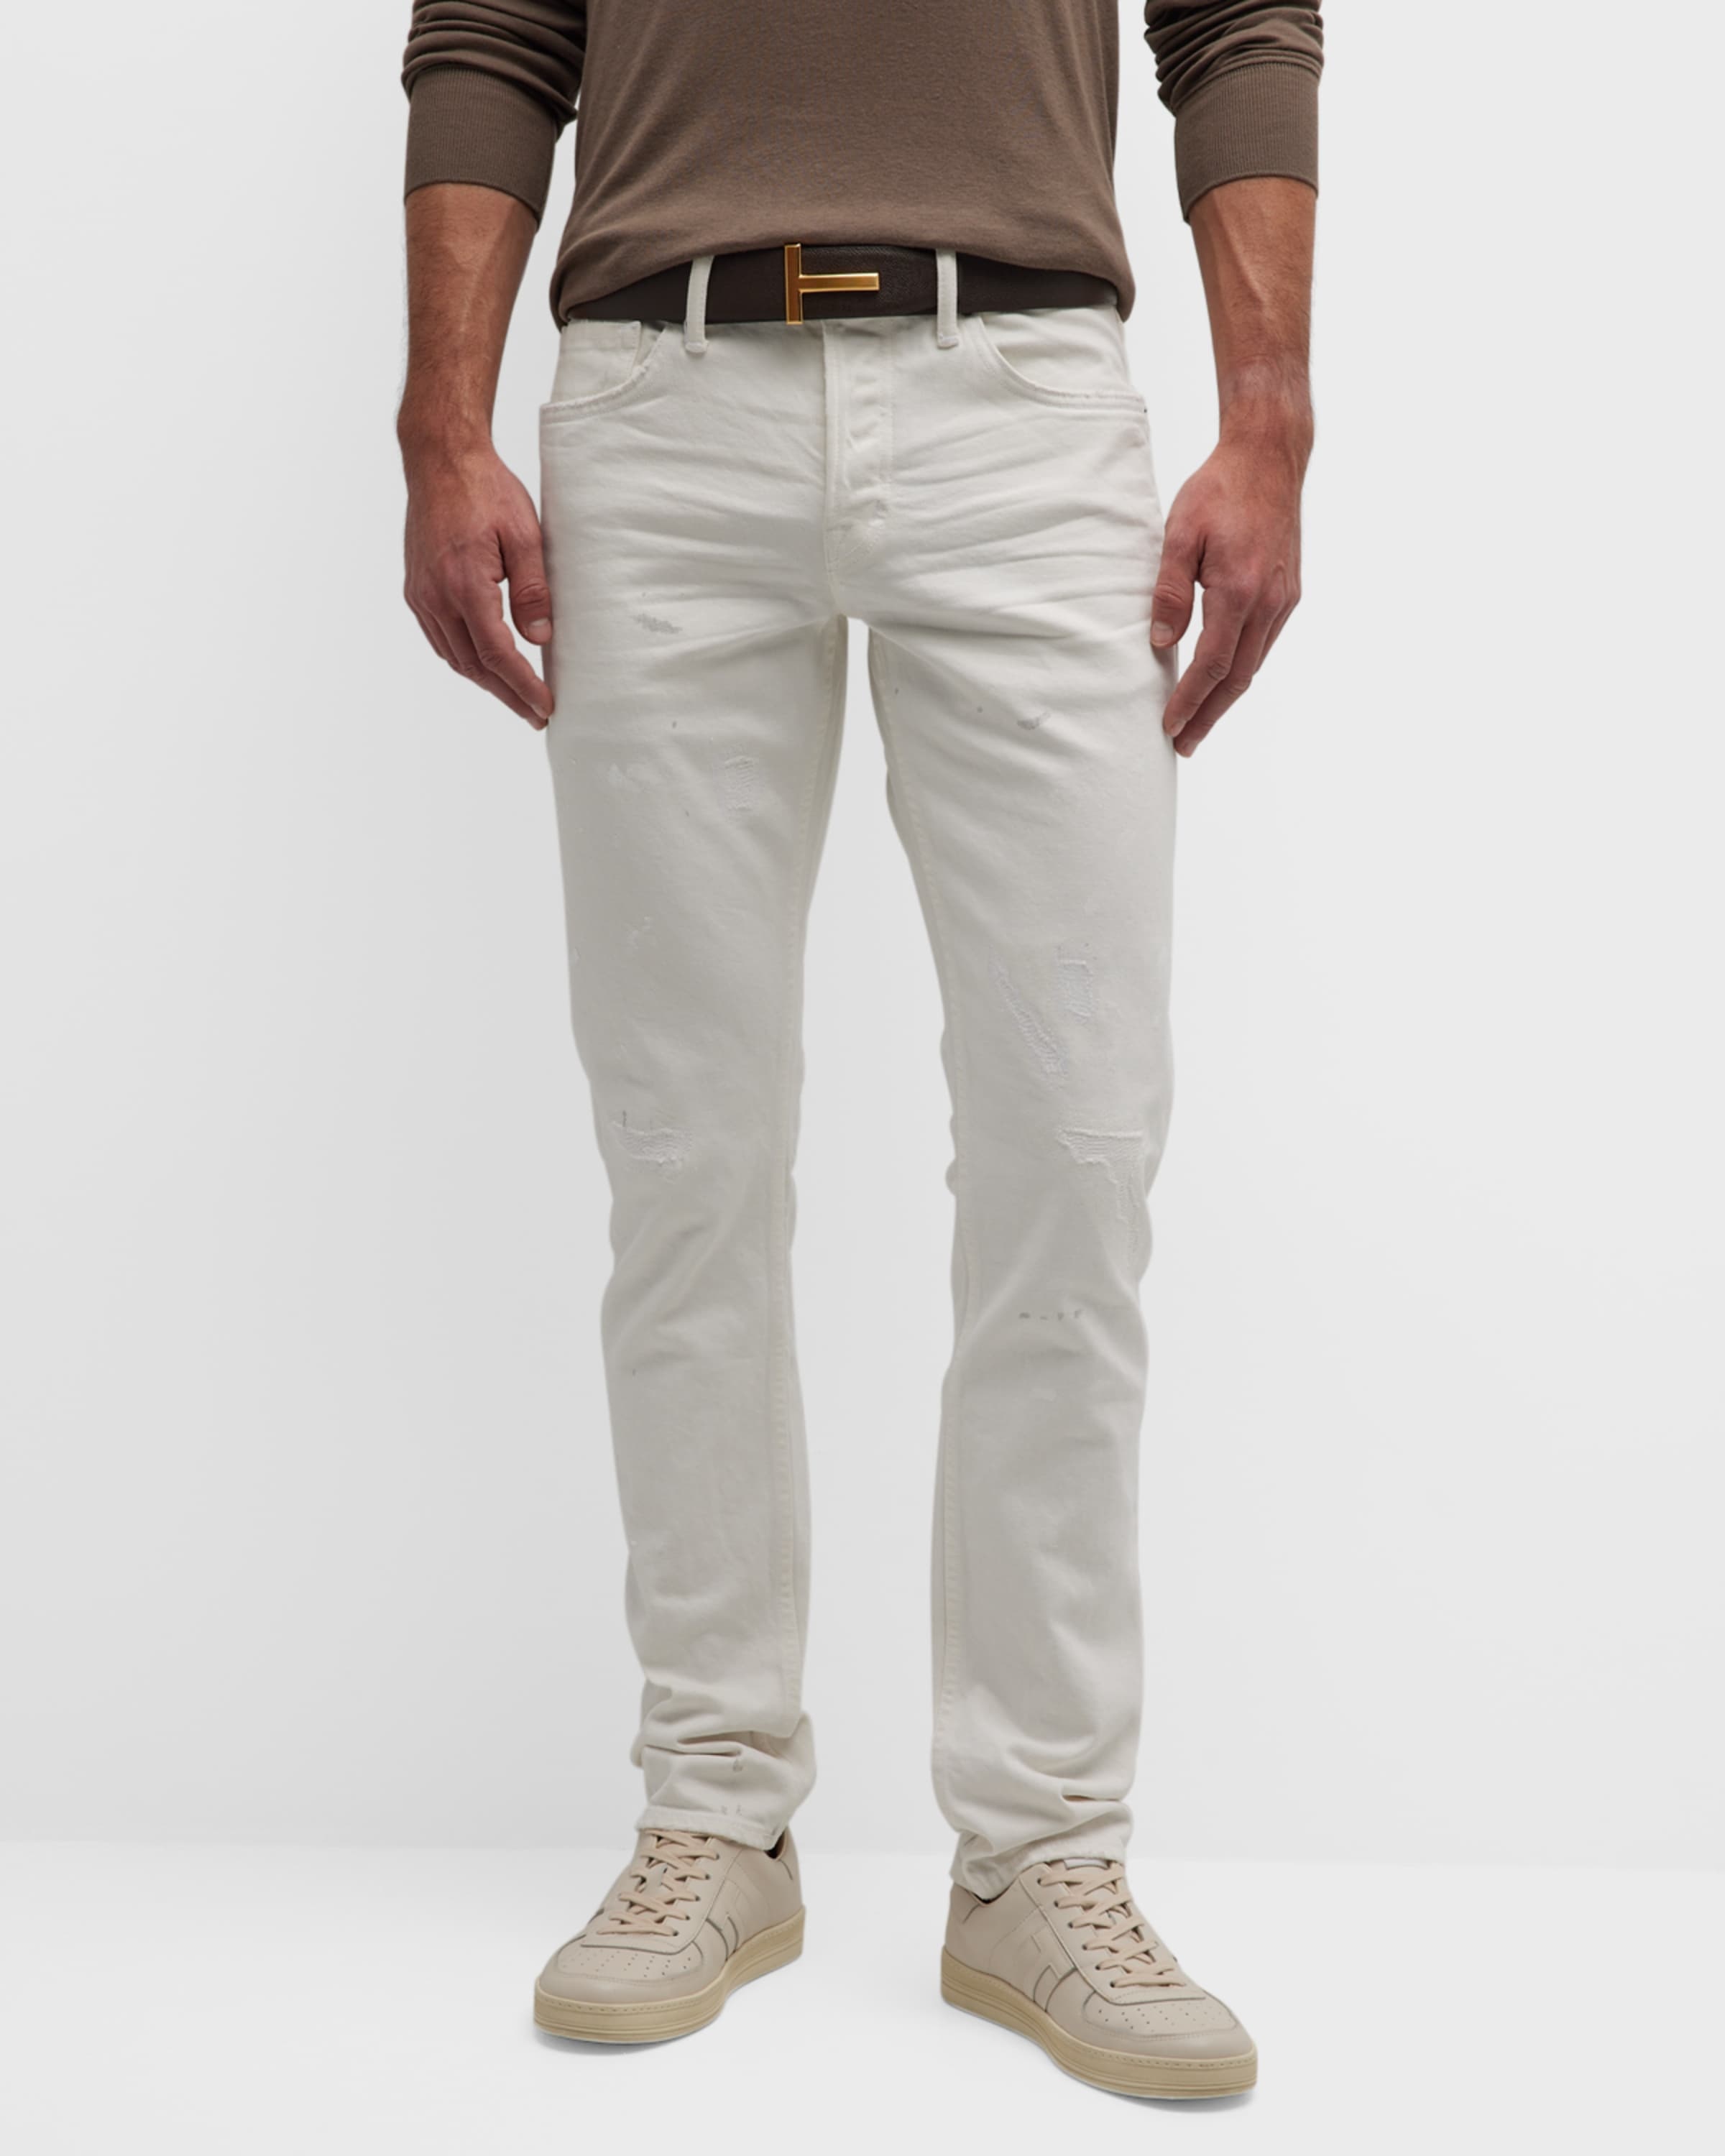 Men's Distressed Selvedge Denim Jeans - 2